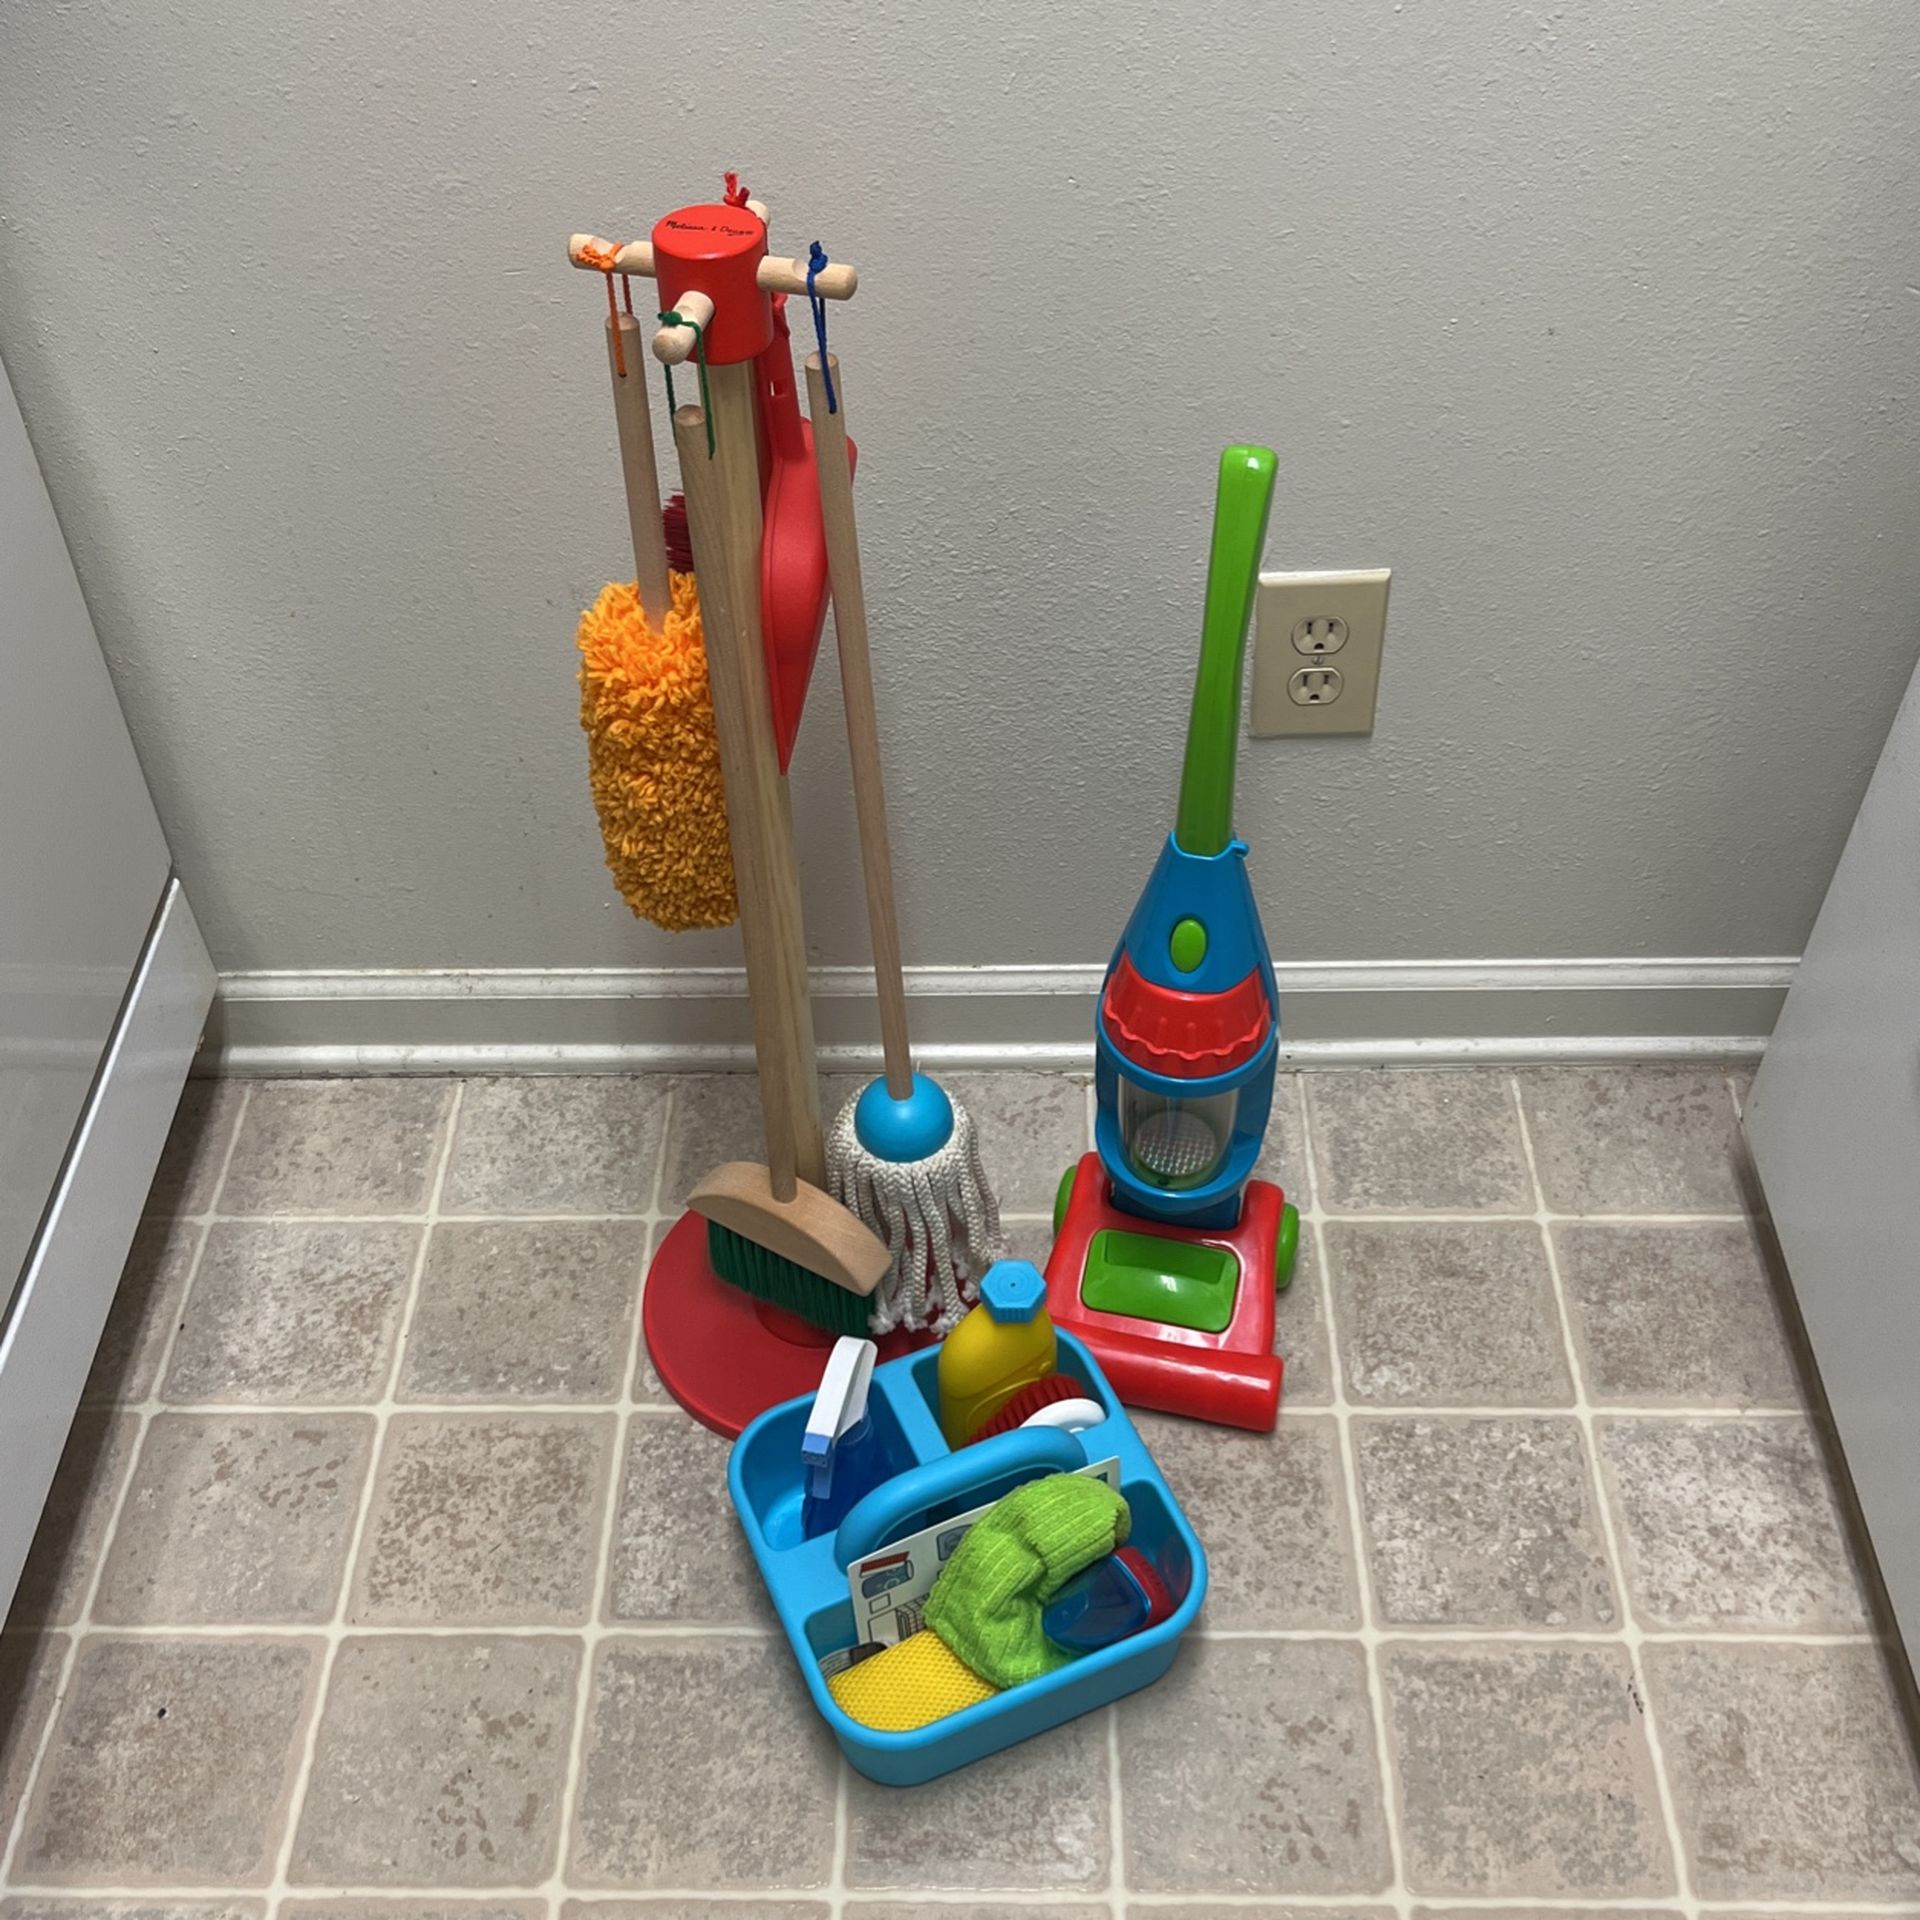 Read Description—Kids Cleaning Toys 